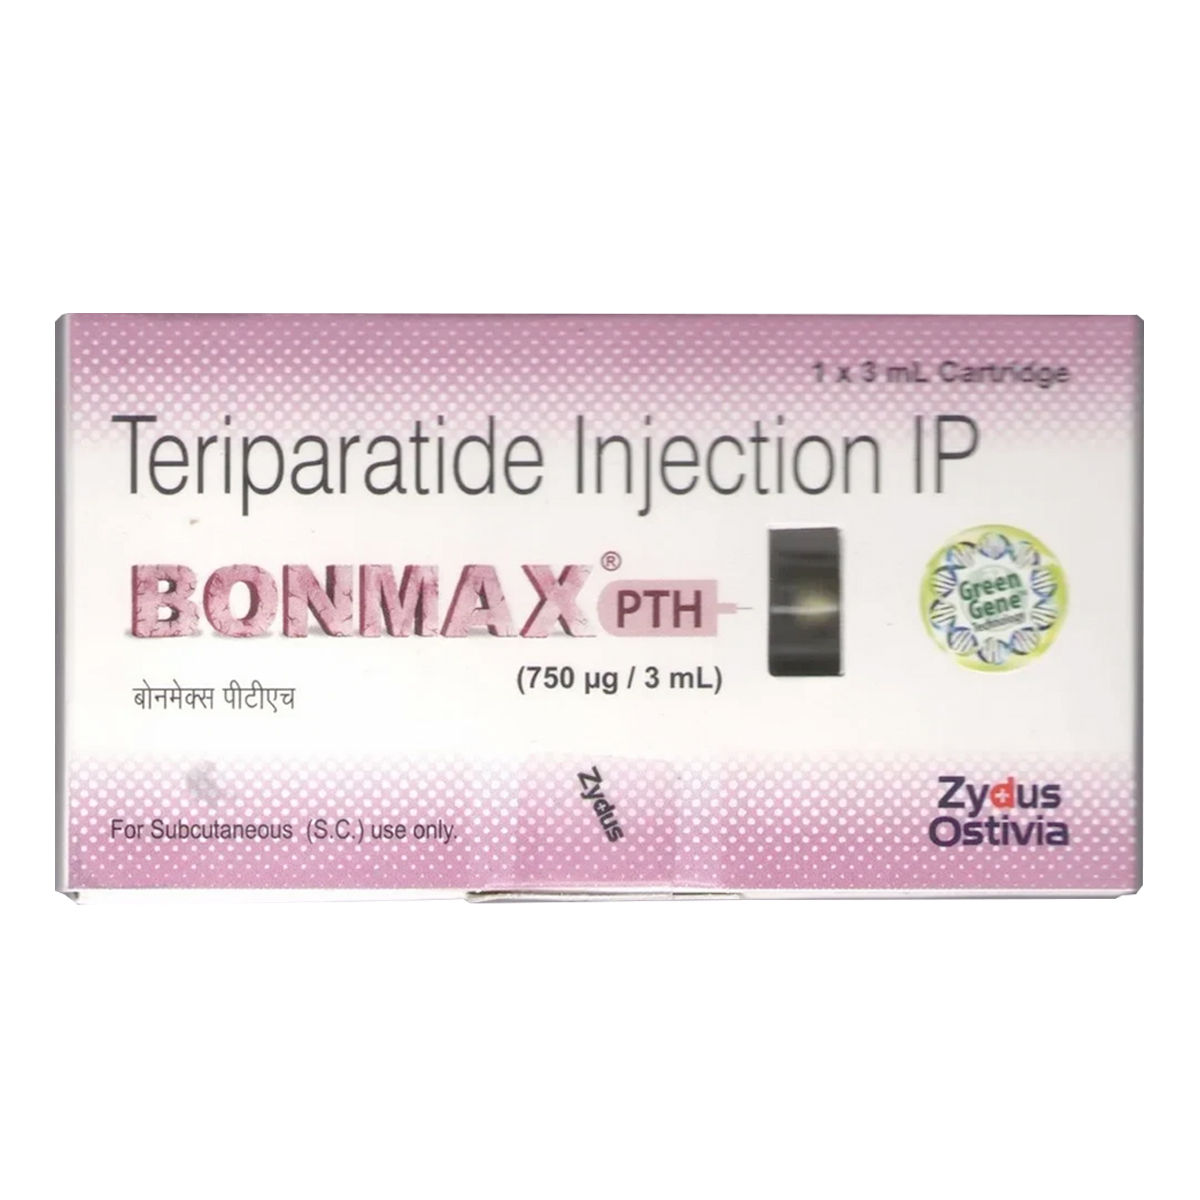 Bonmax Pth 750Mcg/3Ml Inj, Pack of 1 Injection